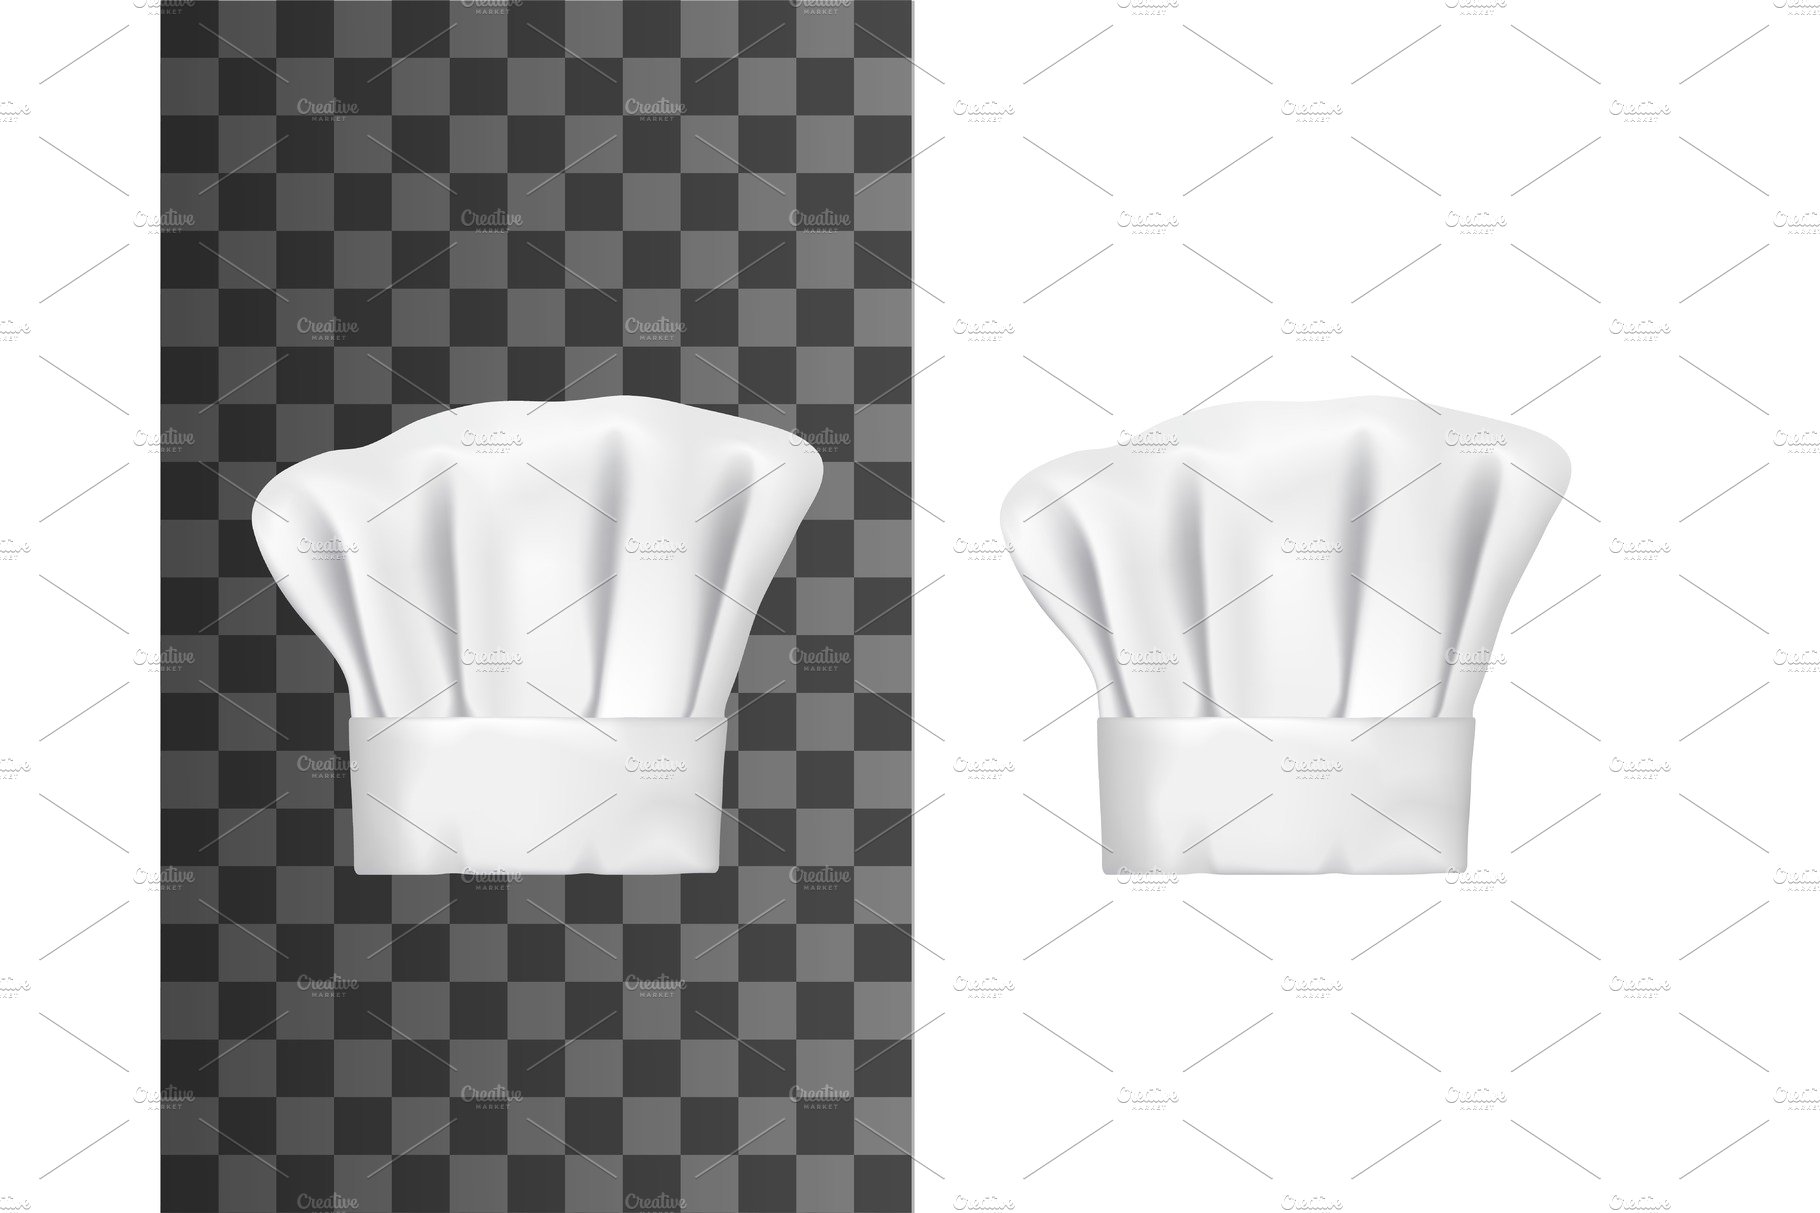 White chef hat, cook cap or toque cover image.